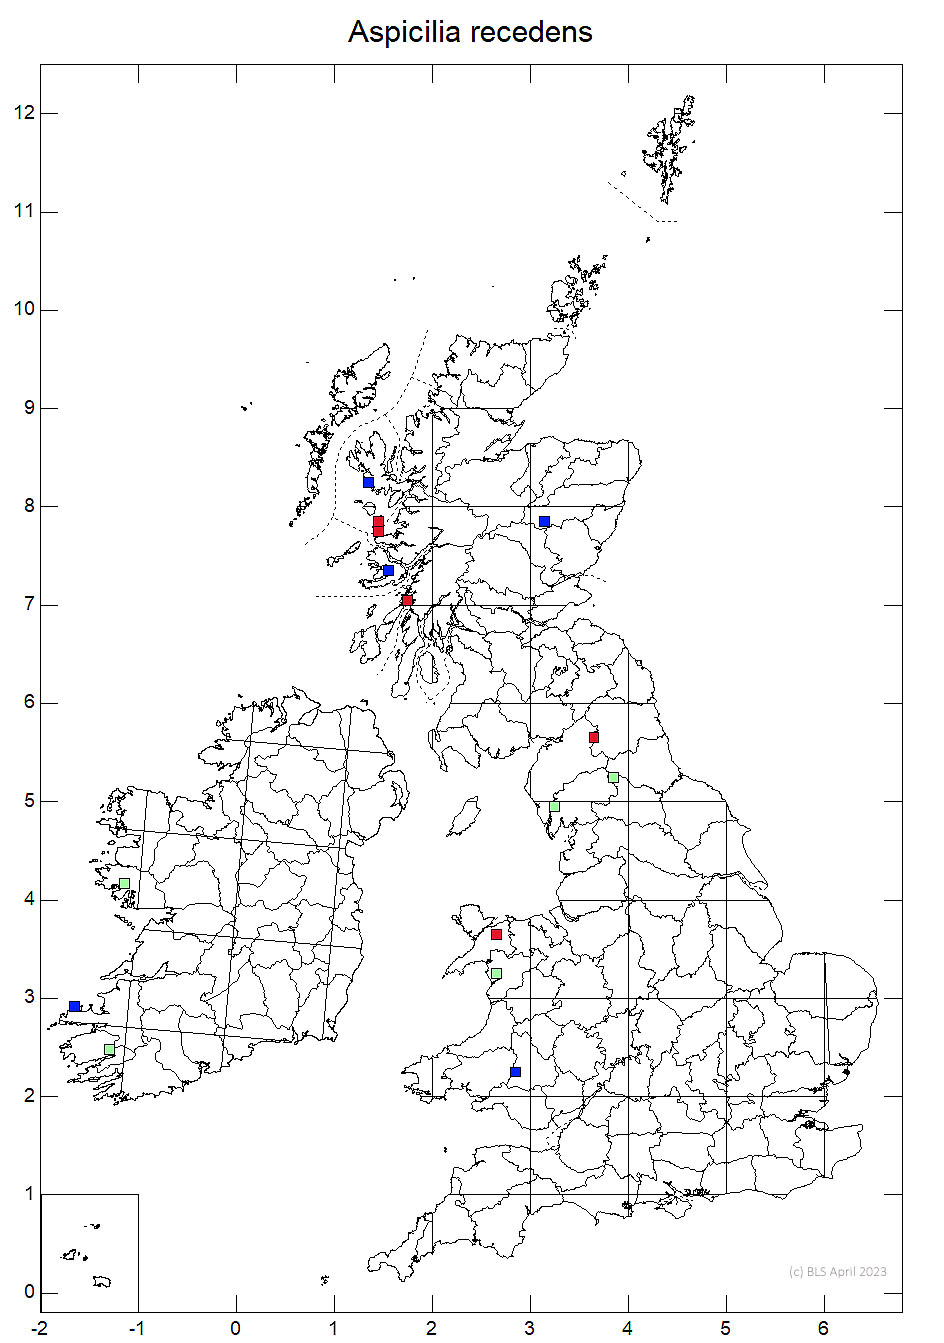 Aspicilia recedens 10km sq distribution map